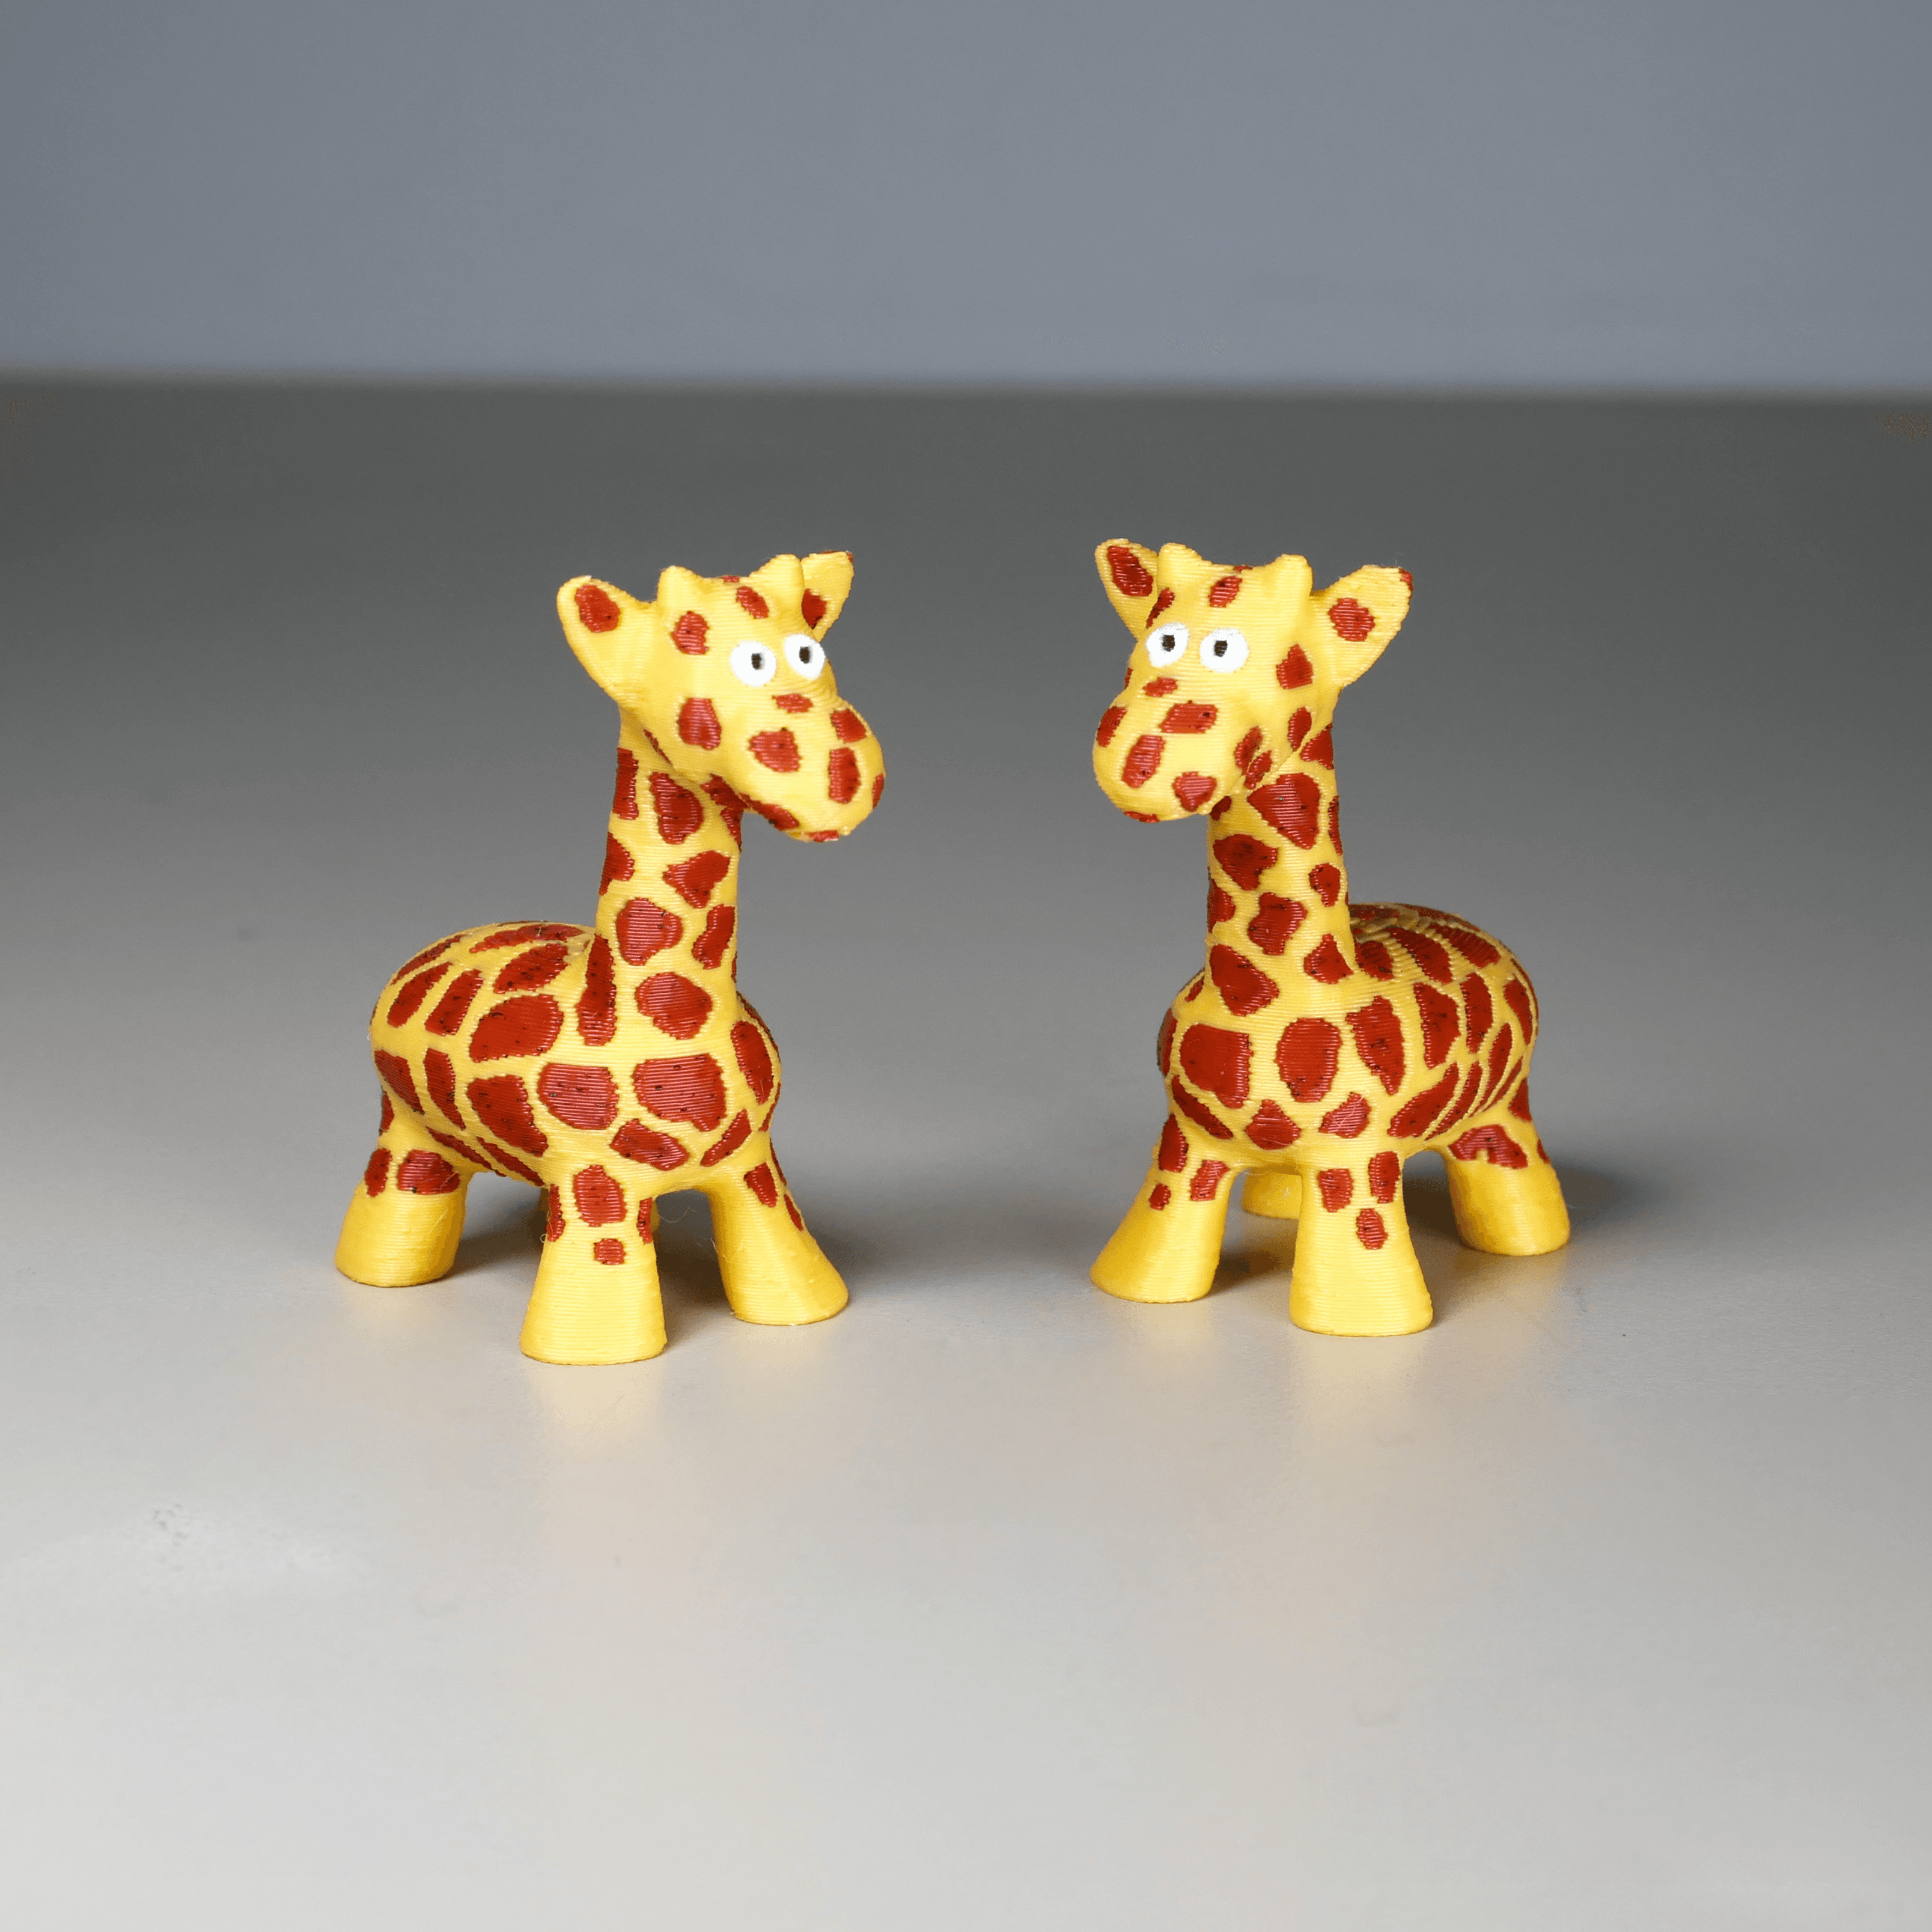 Geoffrey the Tiny Giraffe 3d model